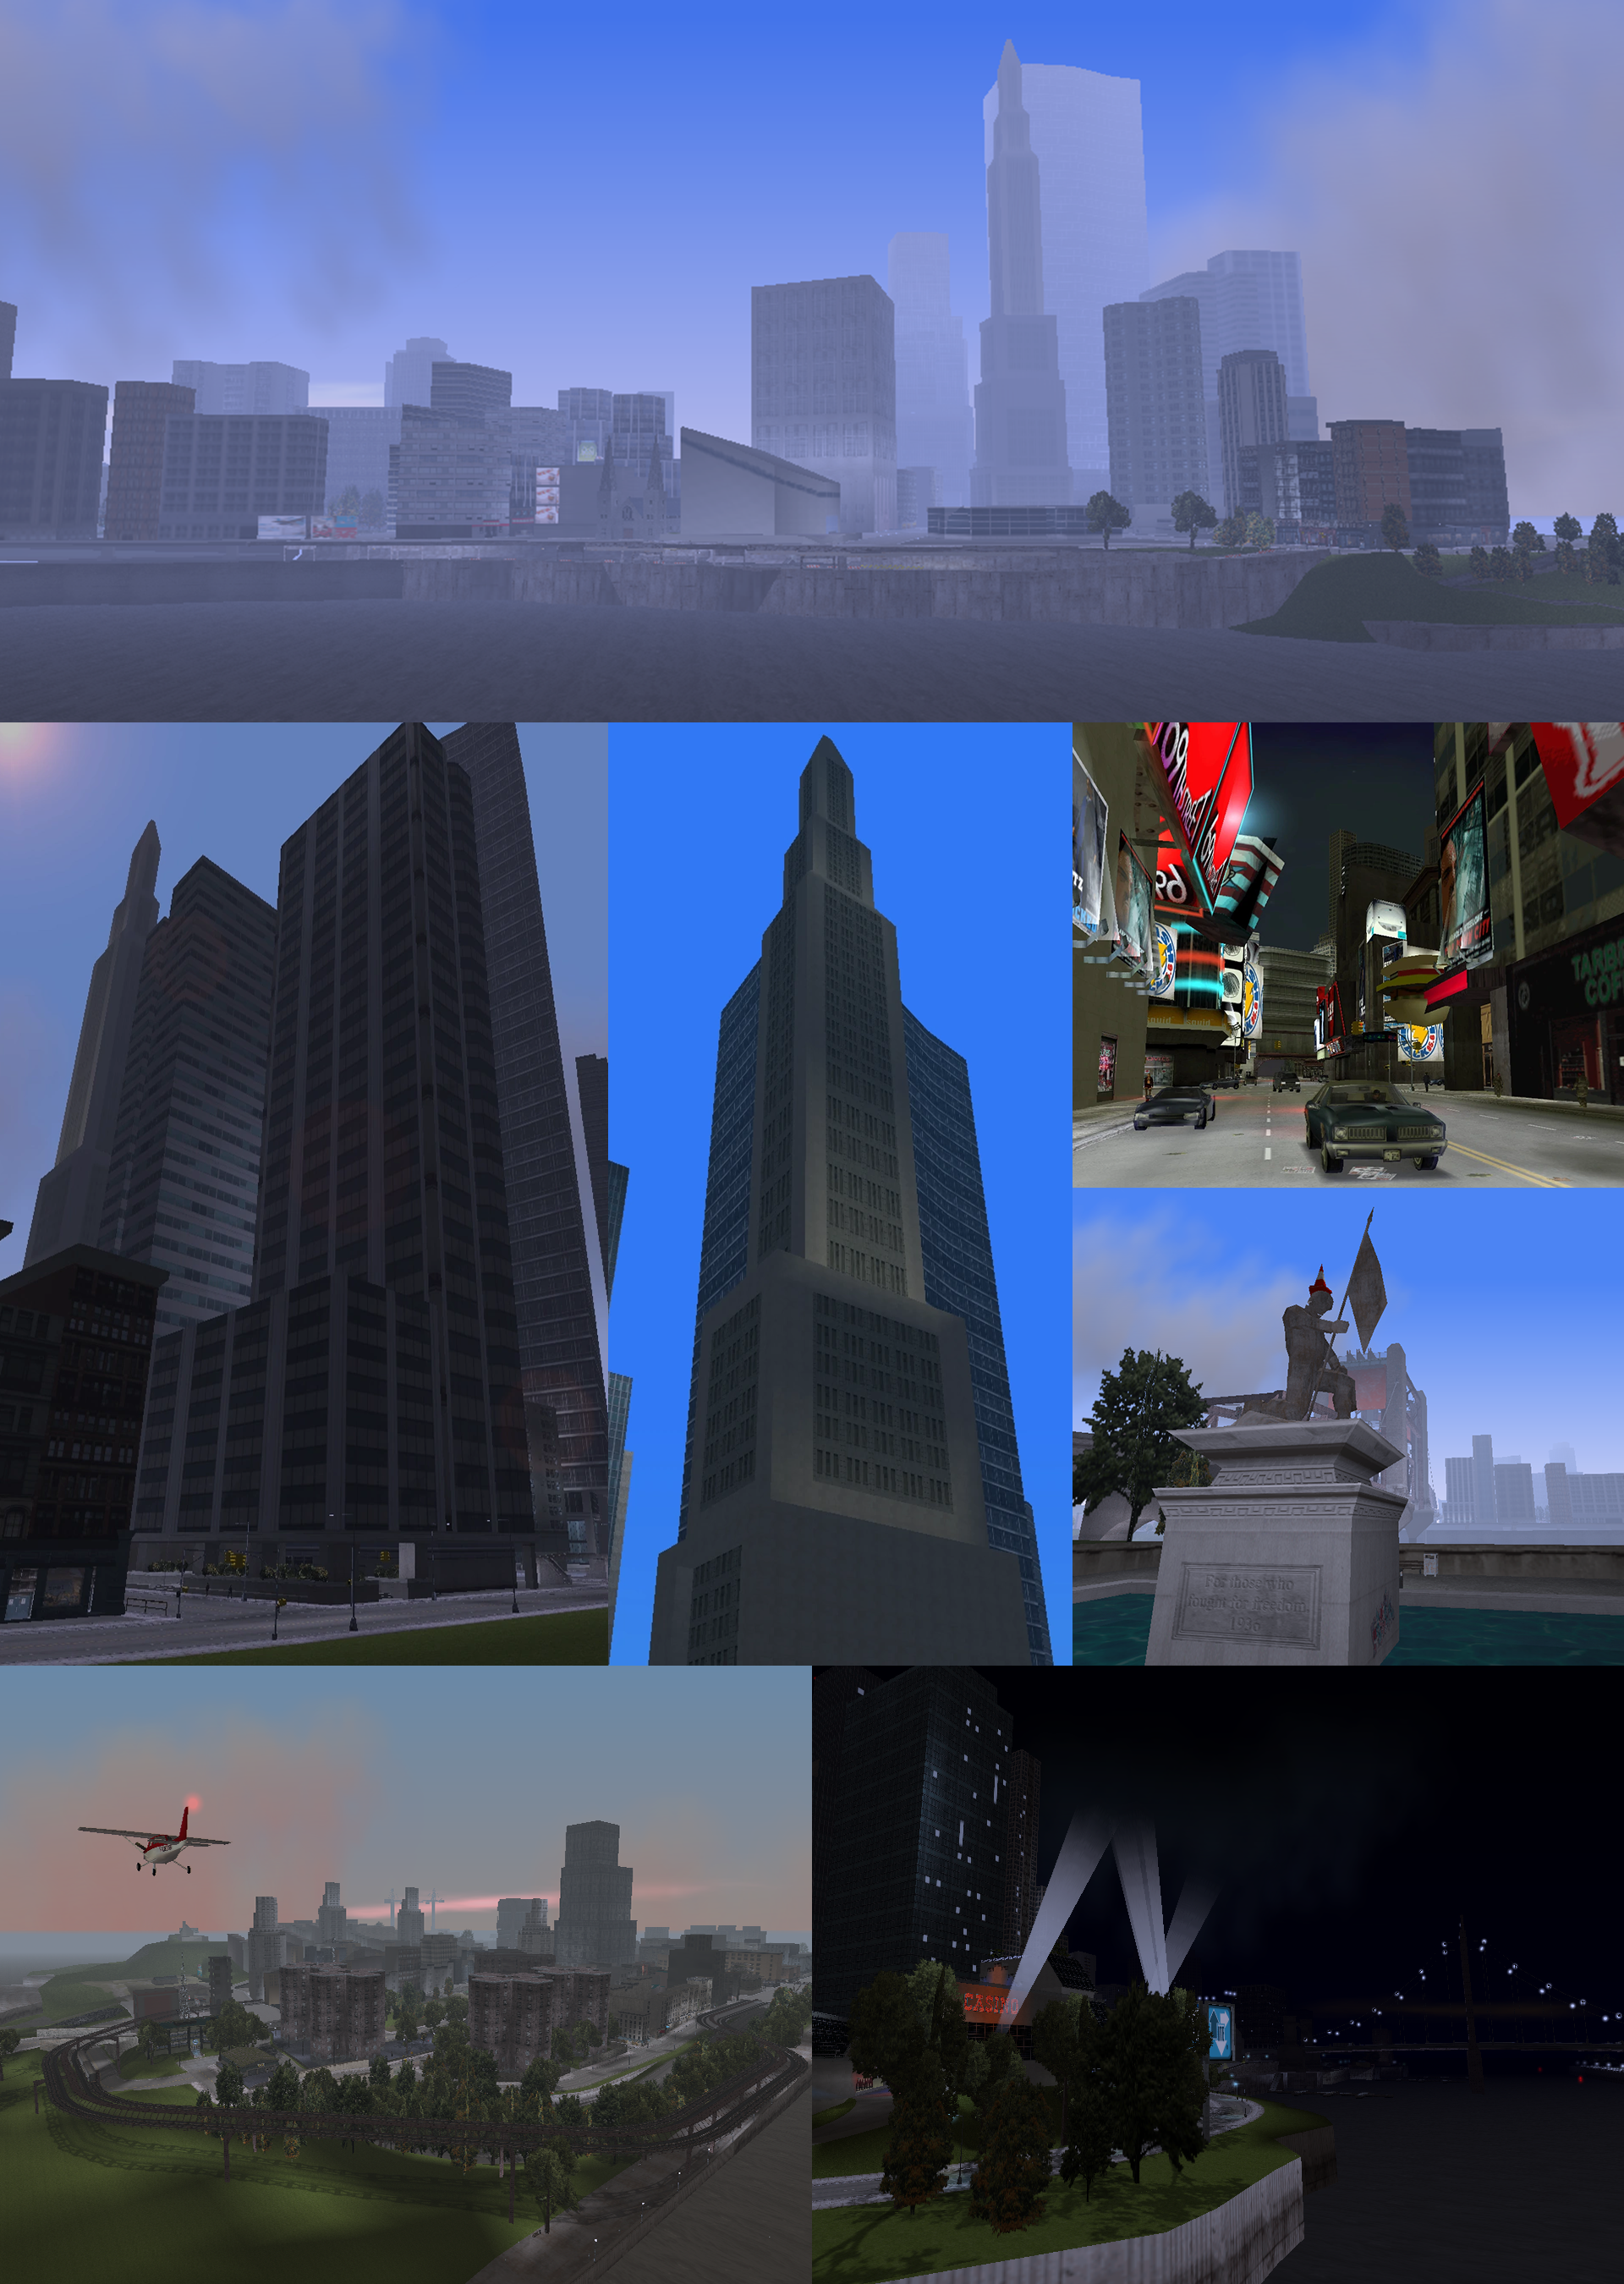 GTA Games for Android: San Andreas, Vice City, Liberty City